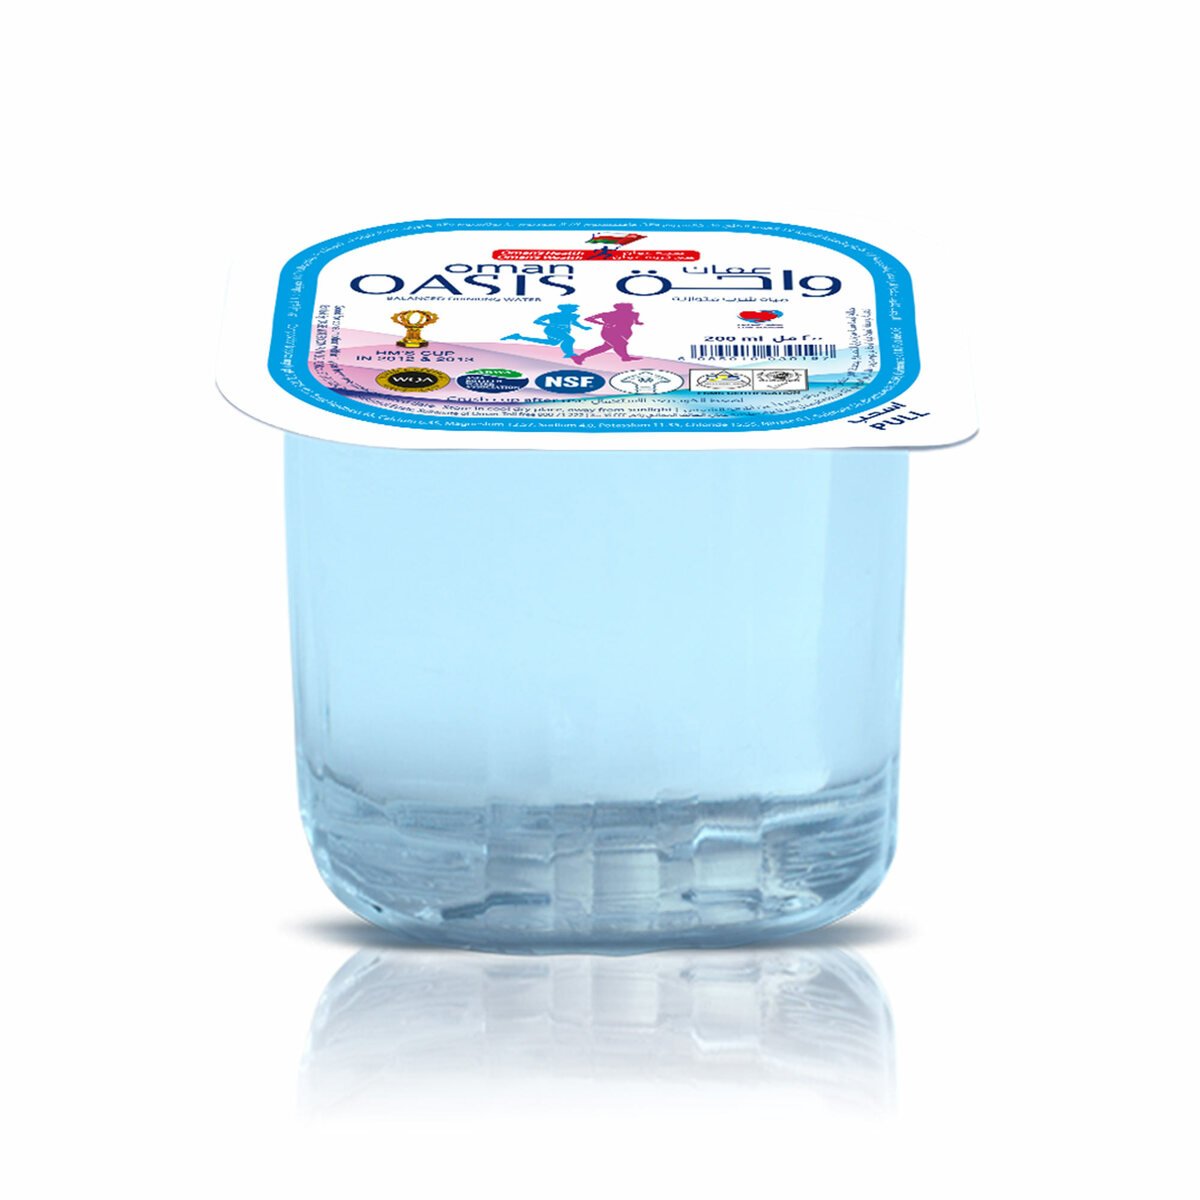 Oman Oasis Balanced Drinking Cup Water 30 x 200 ml